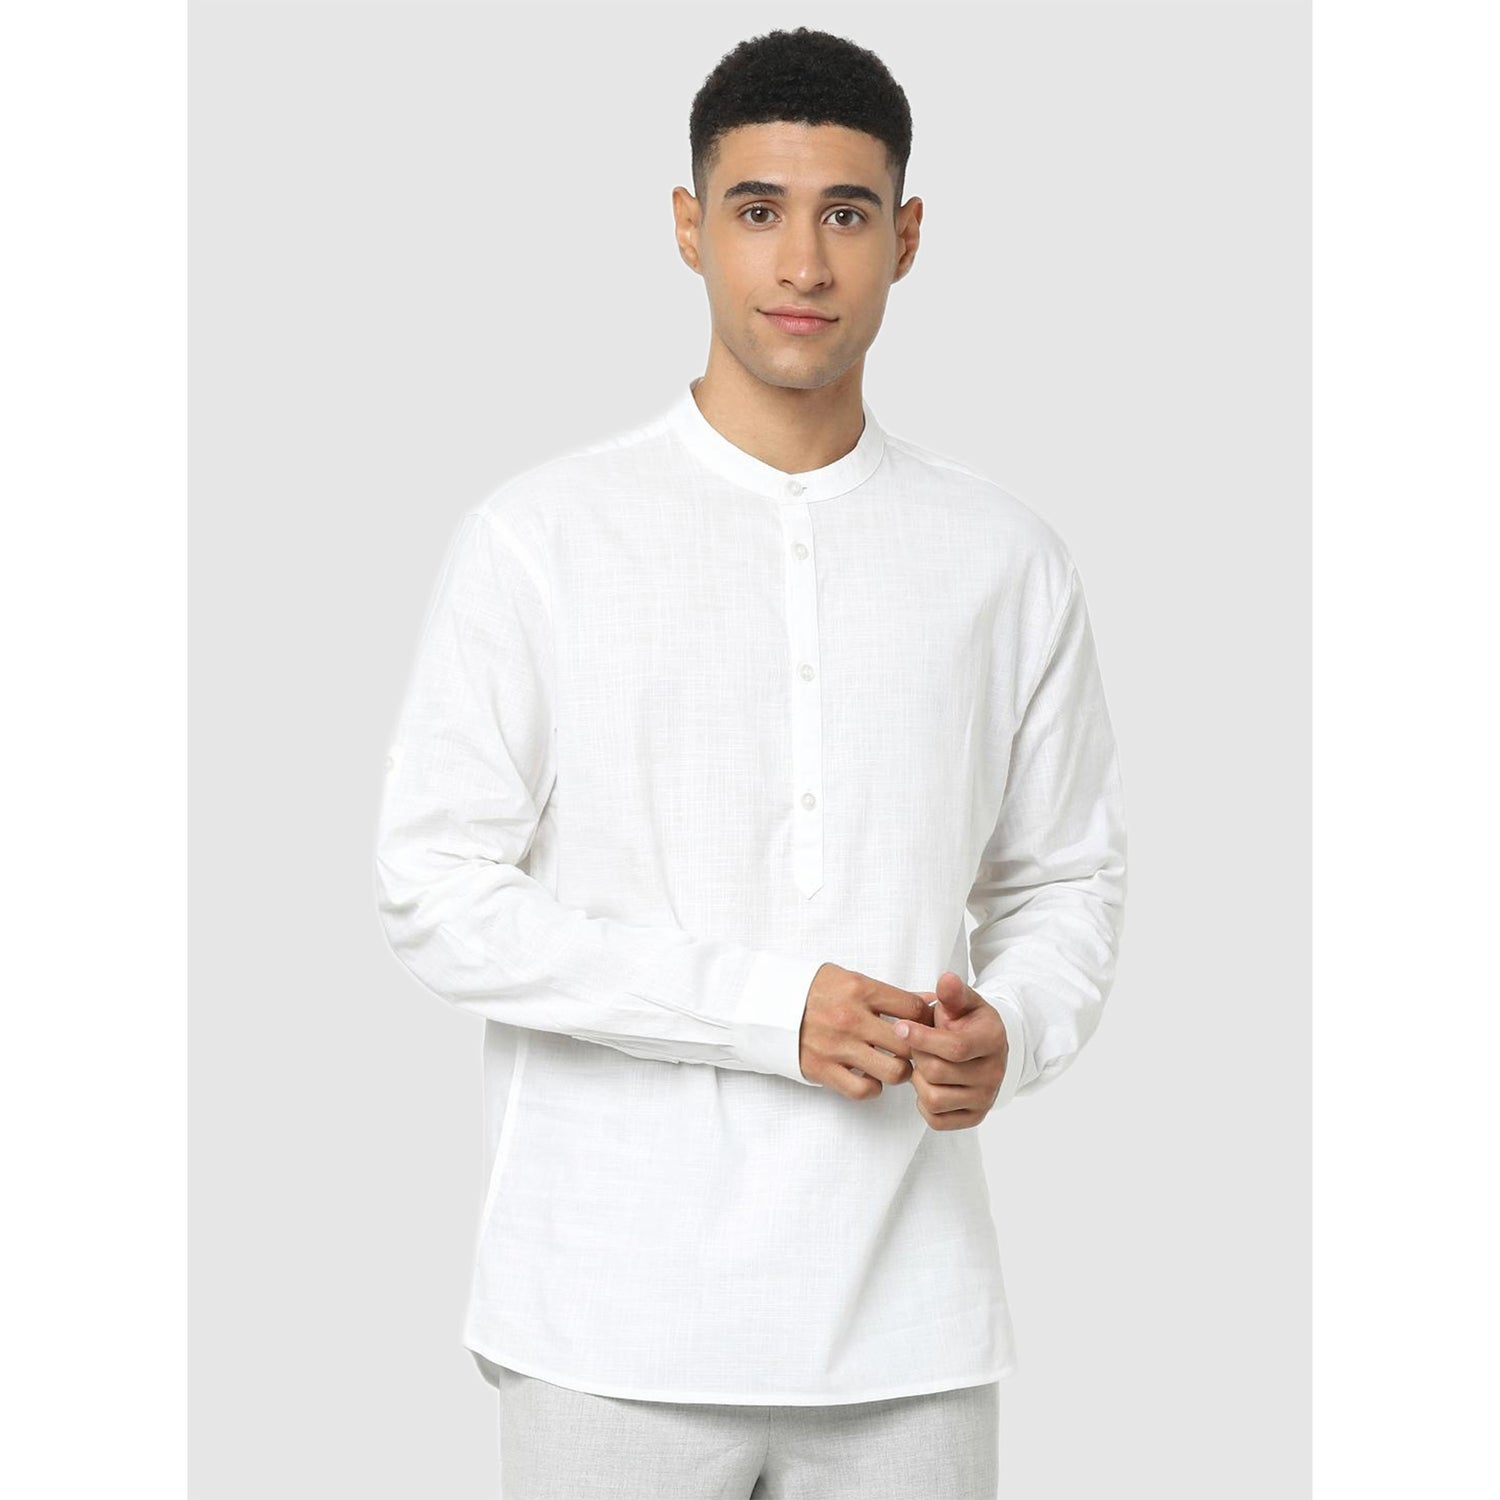 White Classic Regular Fit Casual Shirt (CASLUB)